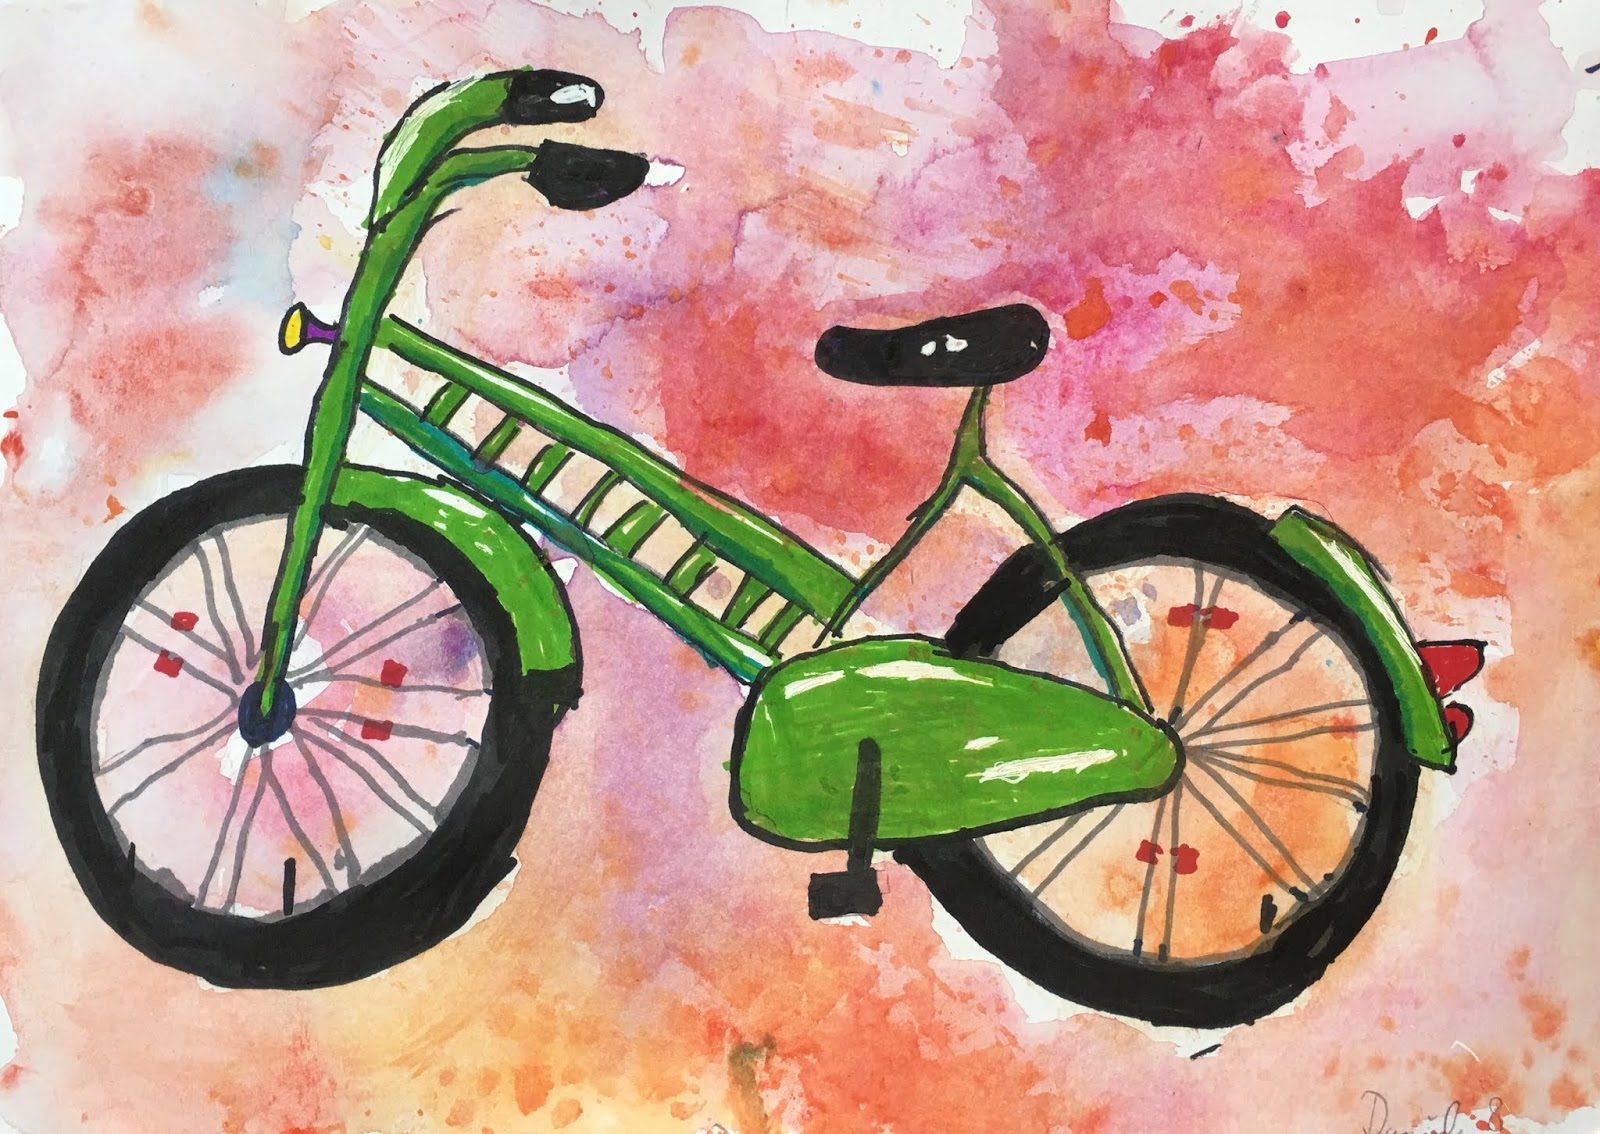 Art Room Britt: Bikes with Complementary Paint Splatter